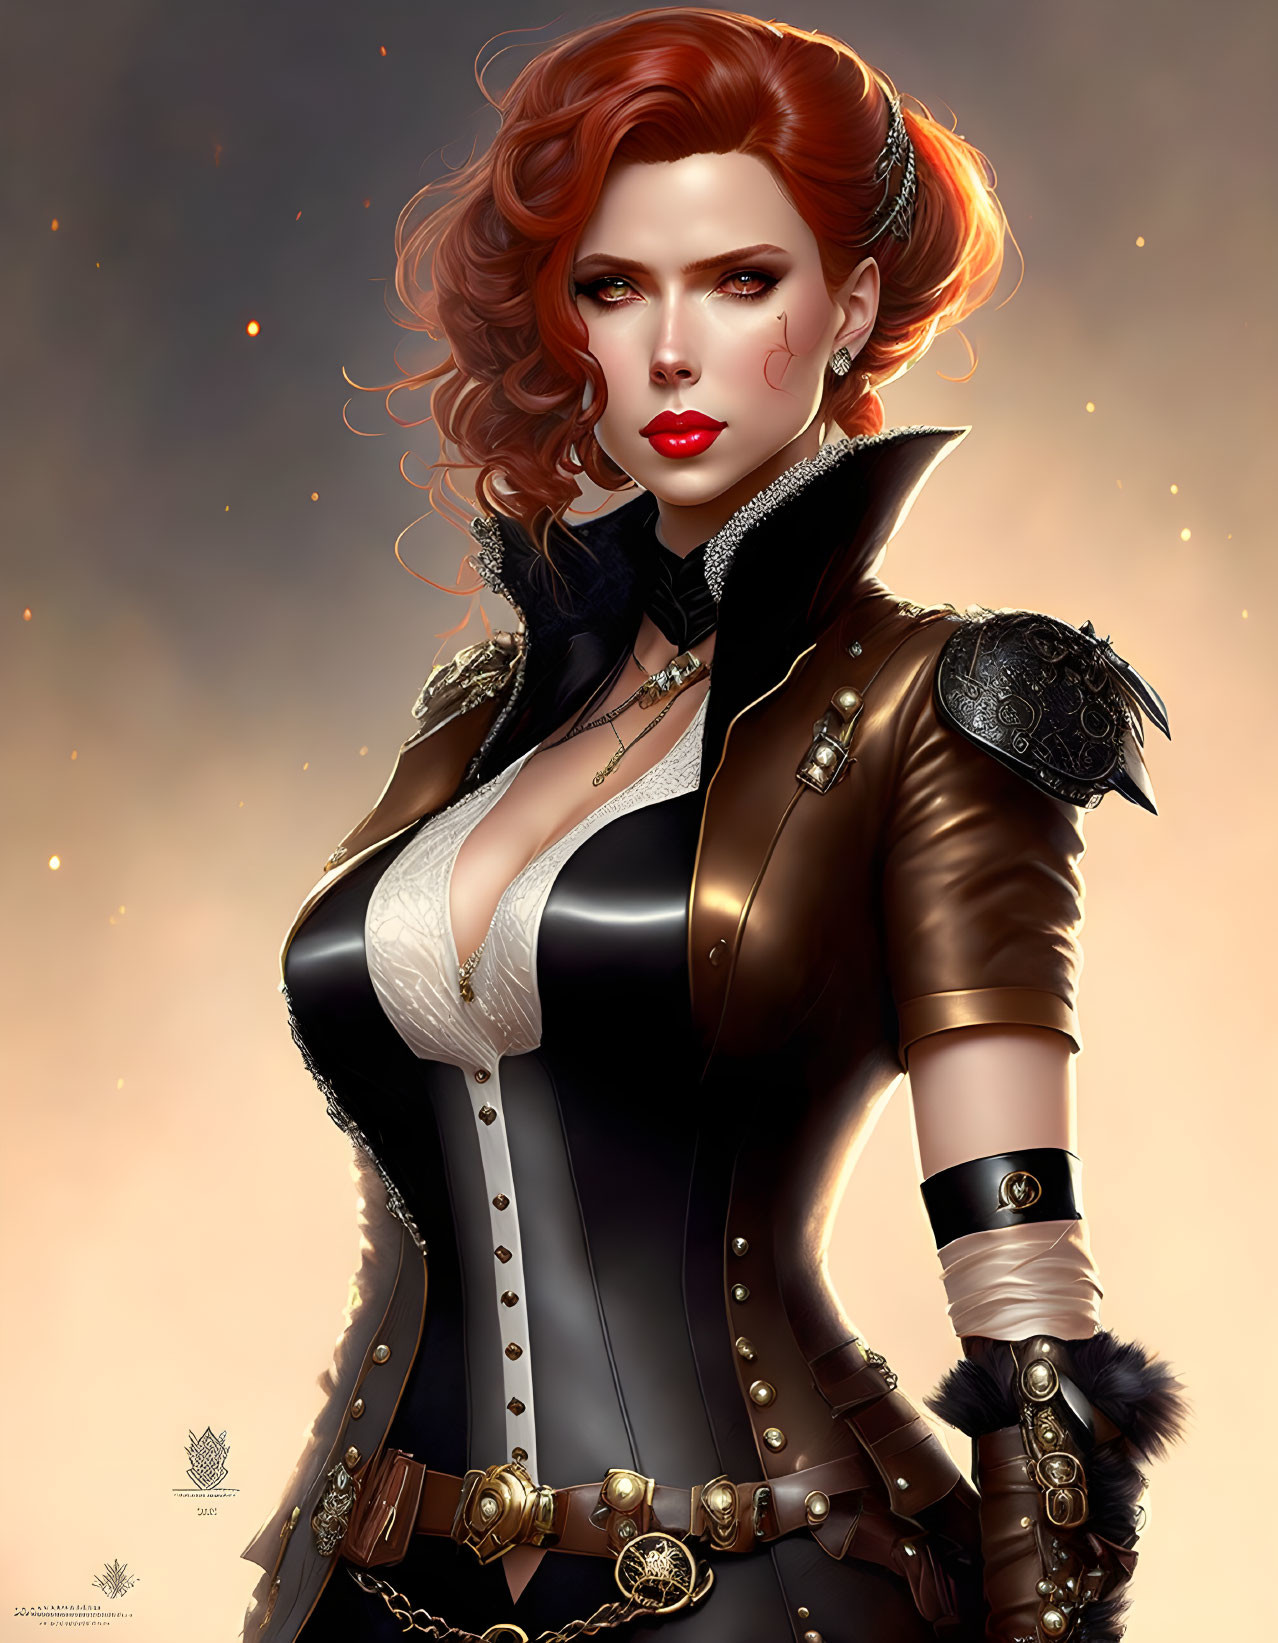 Natasha Romanoff / Black Widow Marvel Universe